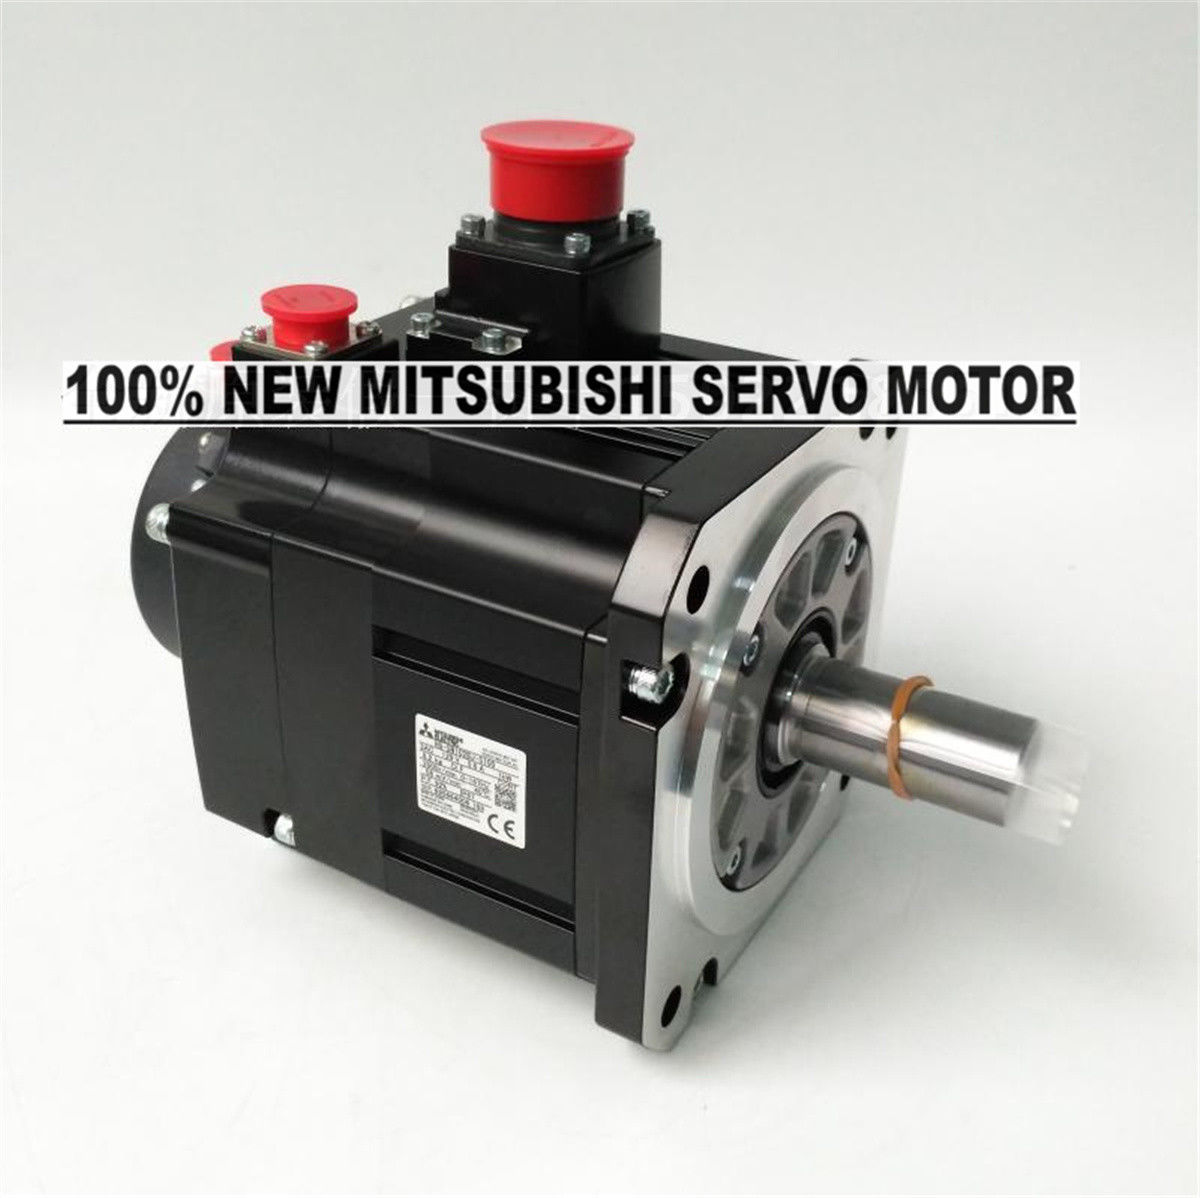 Brand NEW Mitsubishi Servo Motor HG-SN102BJ-S100 in box HGSN102BJS100 - Click Image to Close